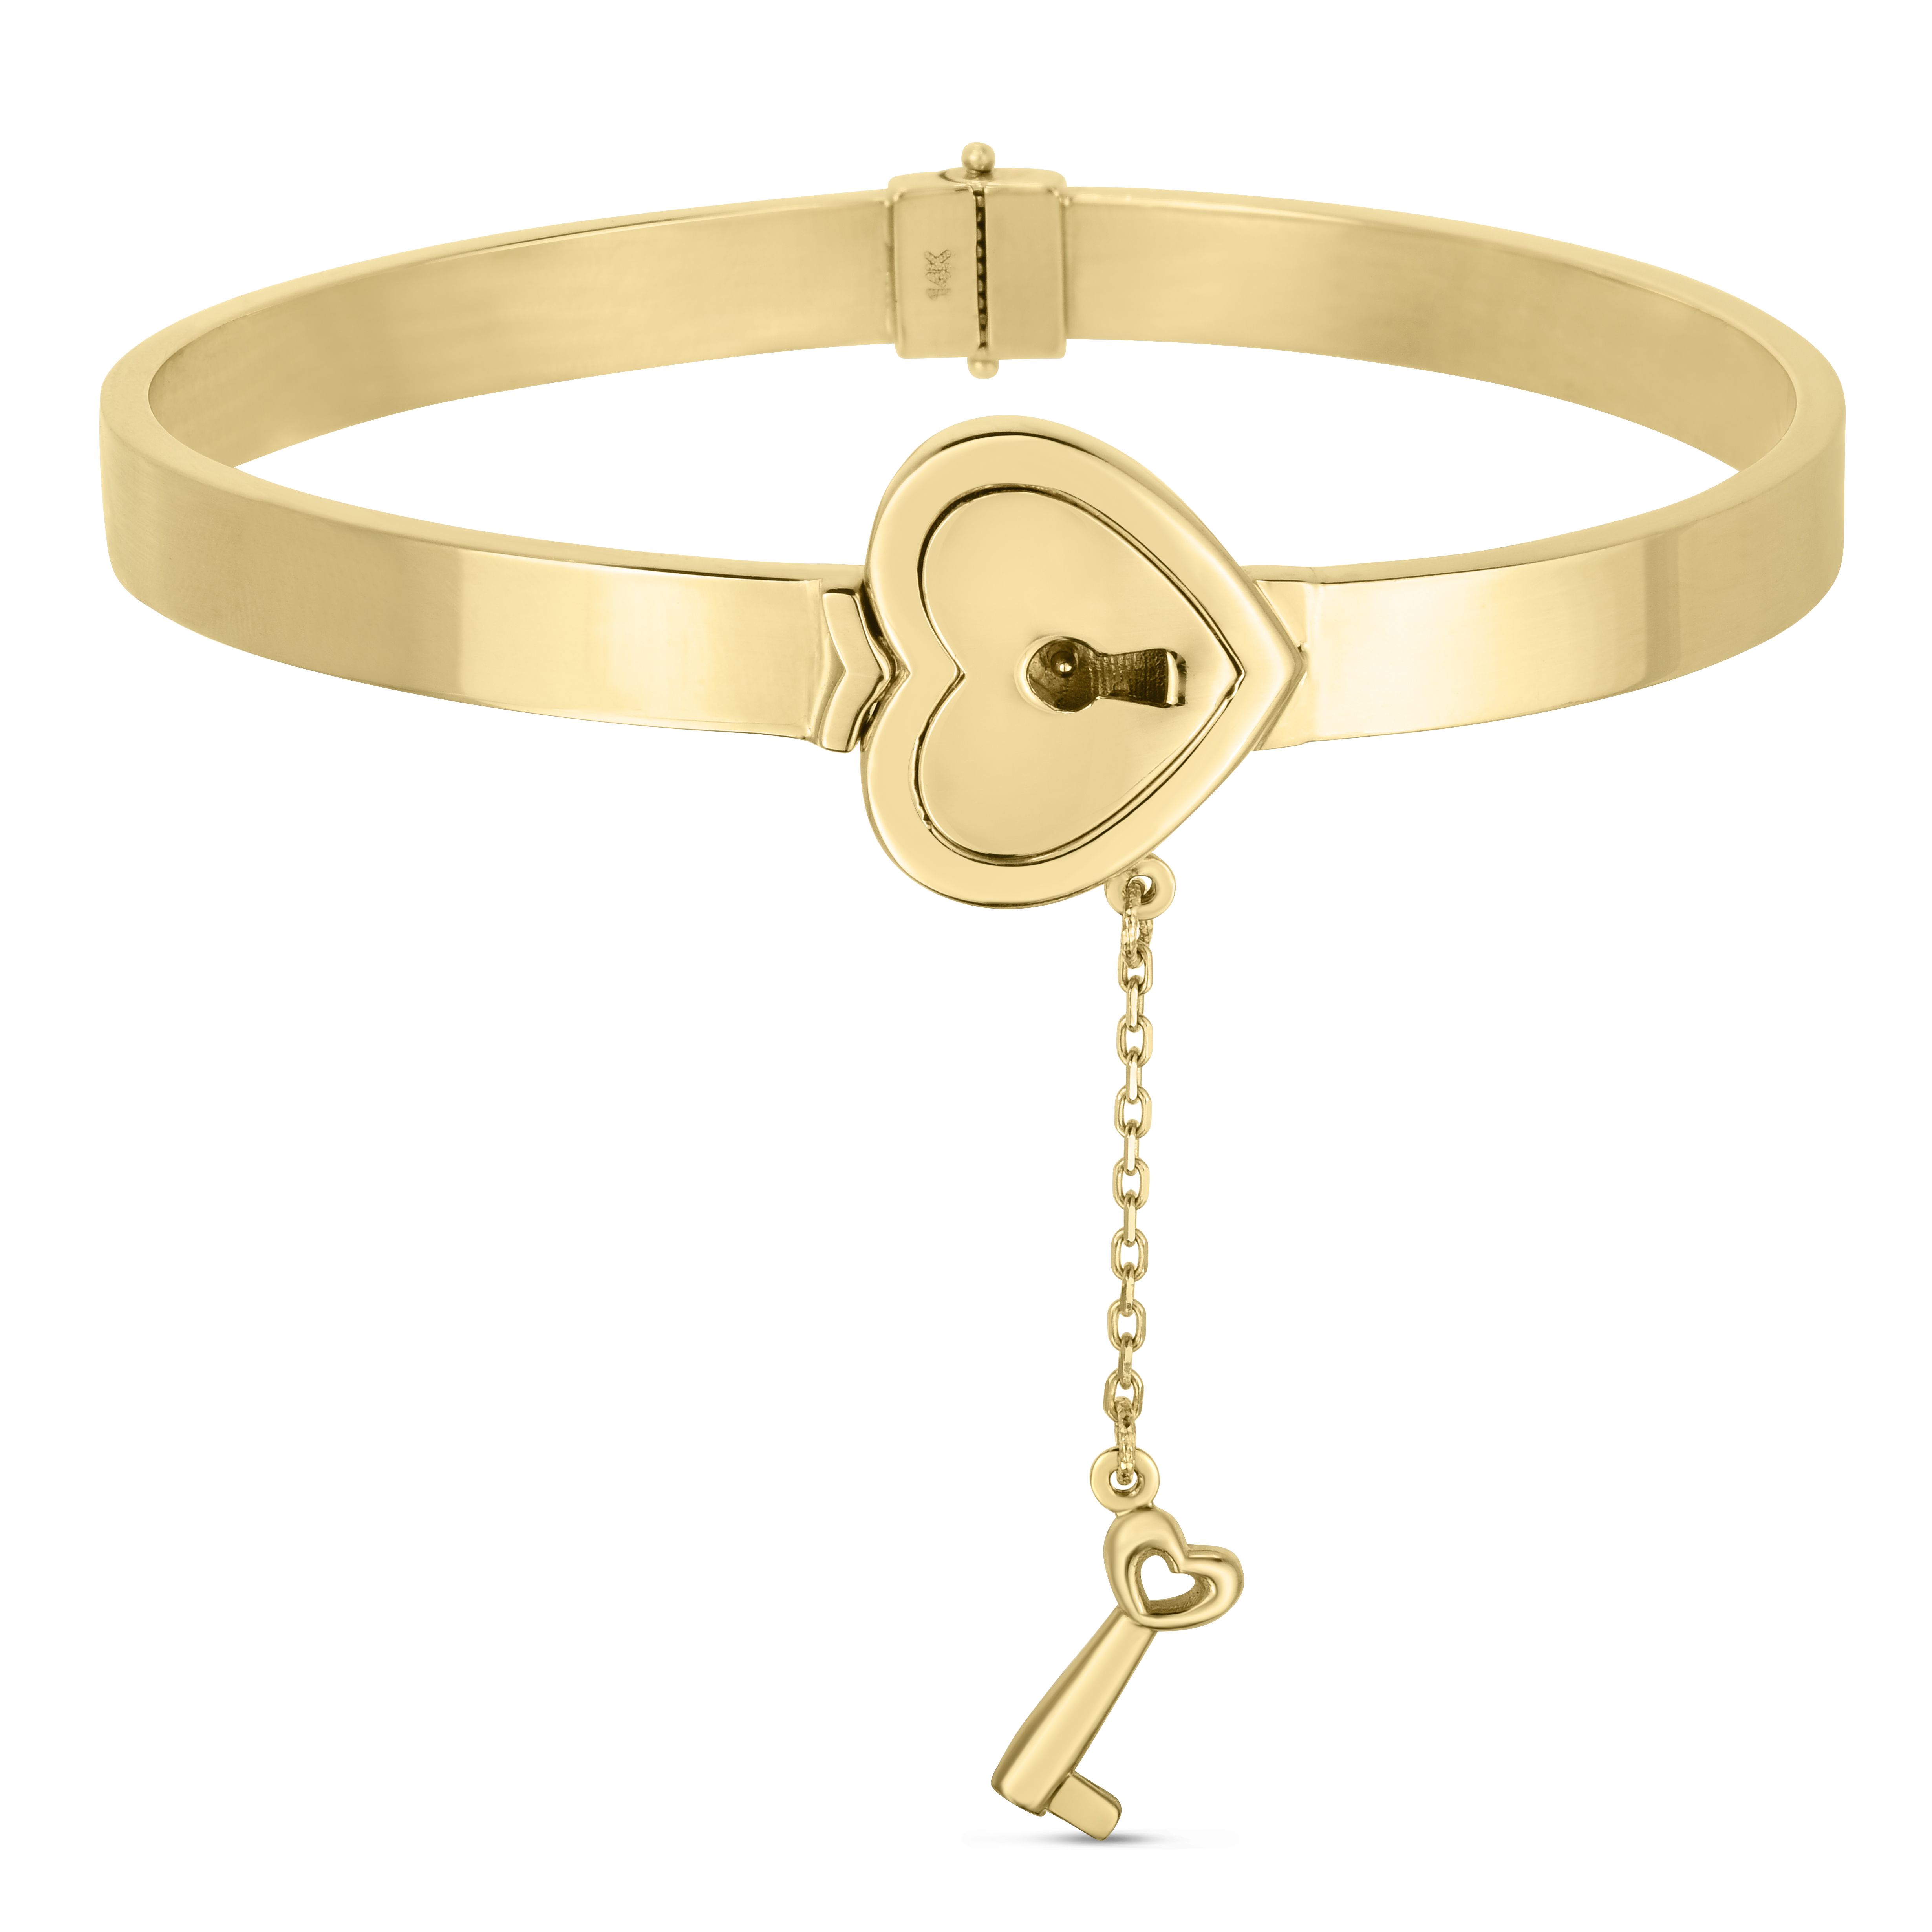 14K Yellow Gold Lock & Key Charm Necklace